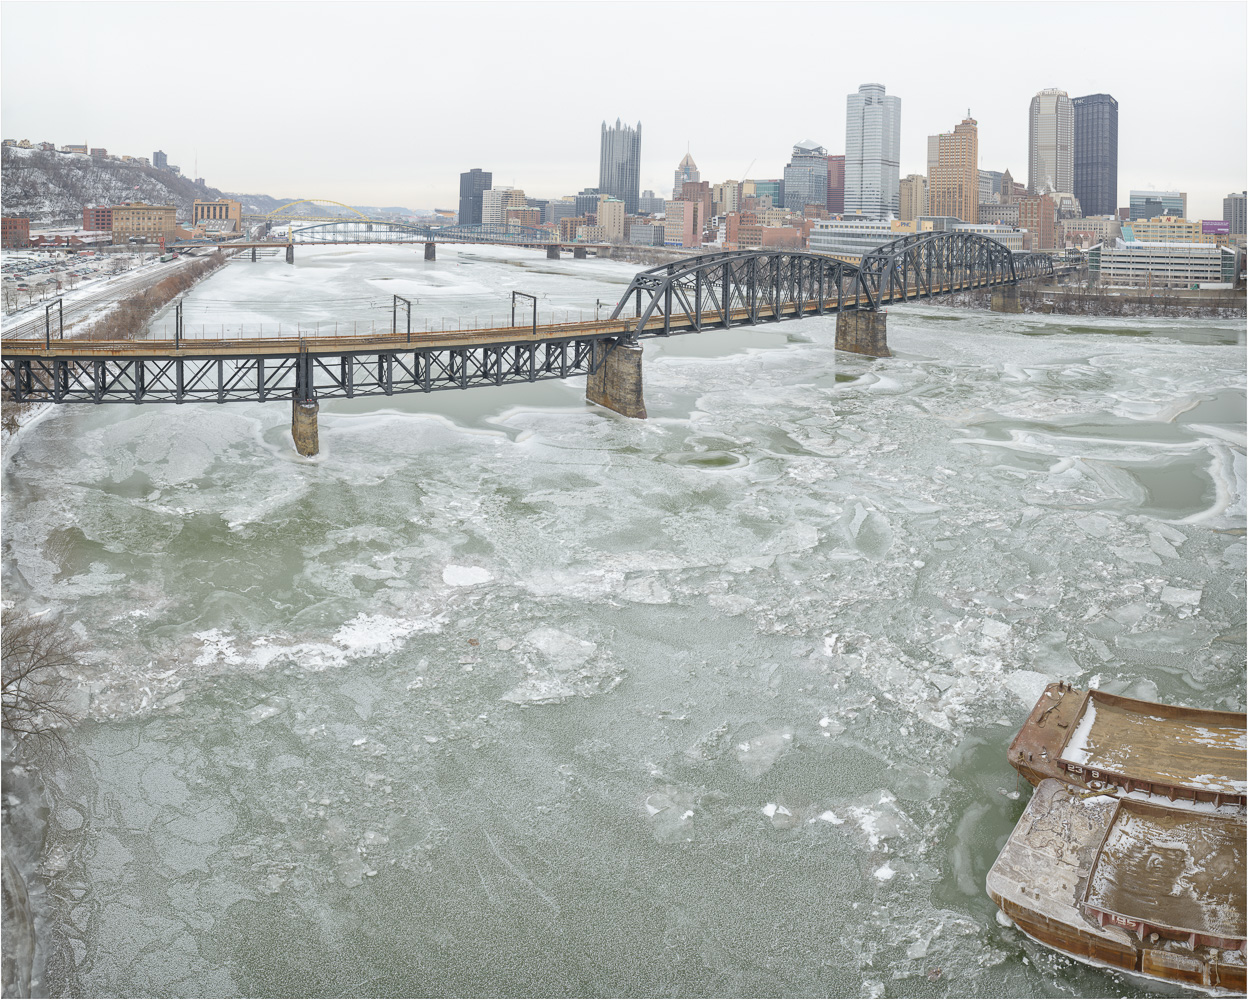 Floating-Above-A-Frozen-River.jpg